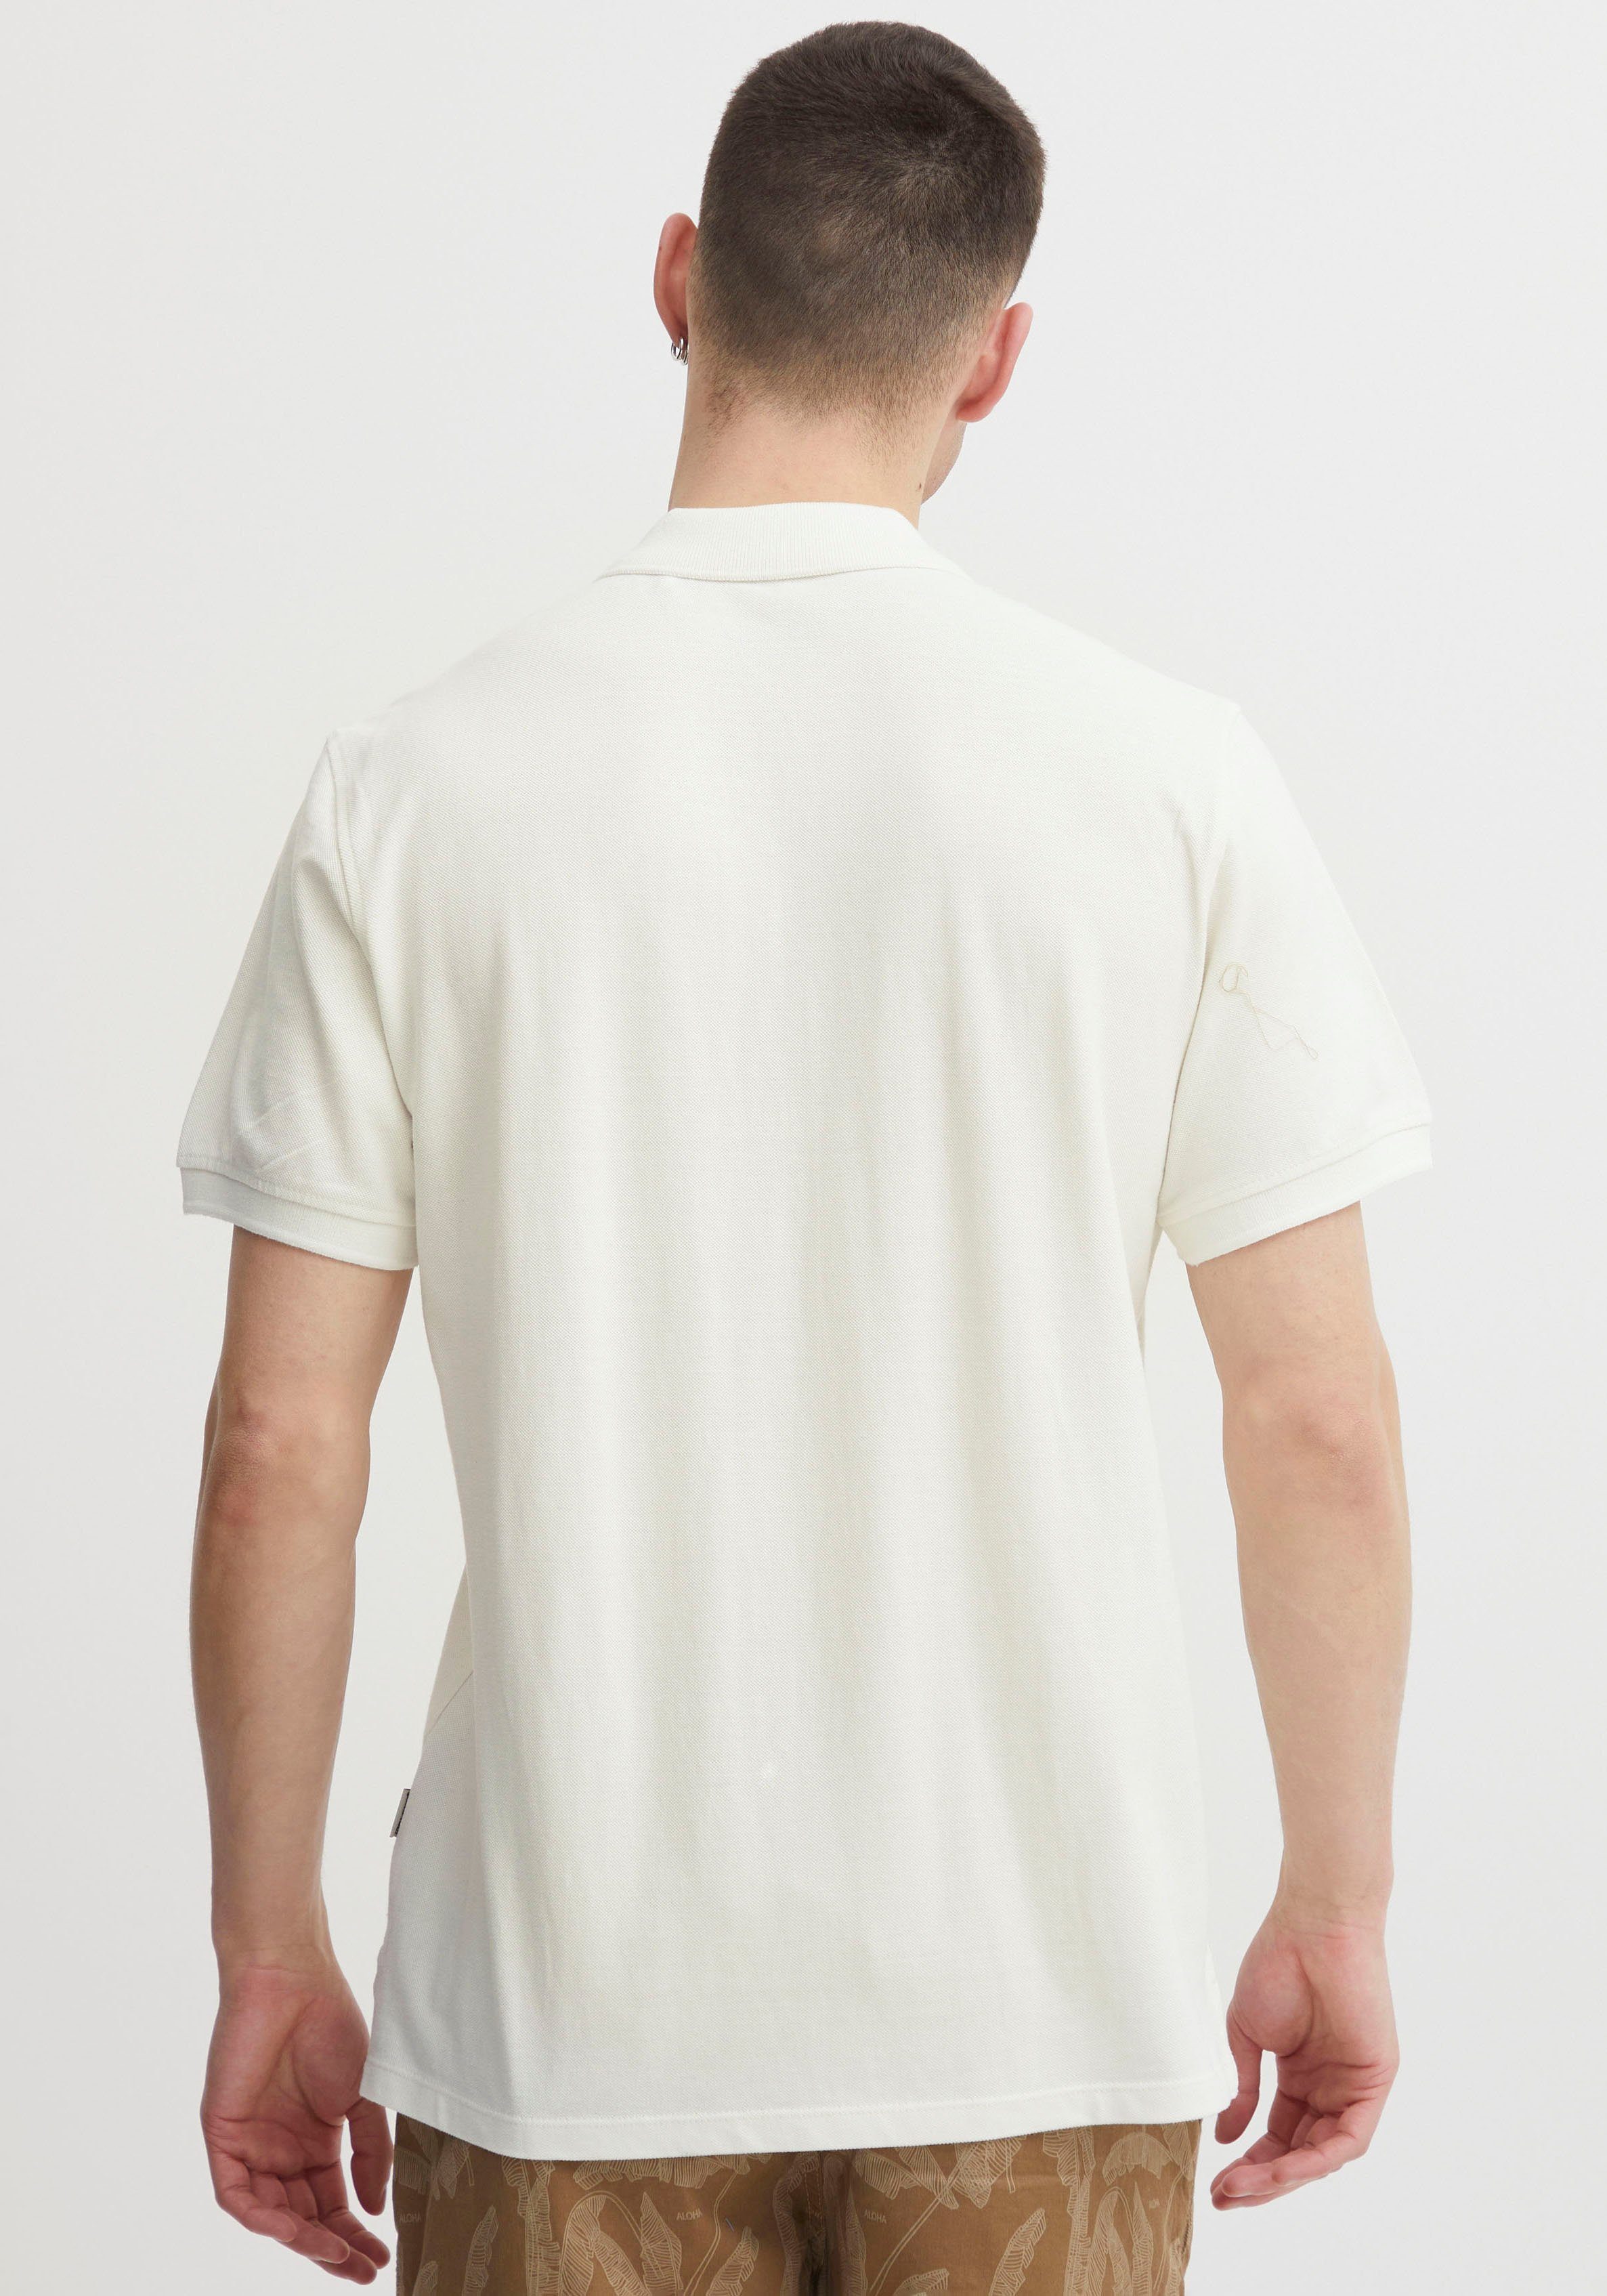 Blend BL-Poloshirt white Poloshirt